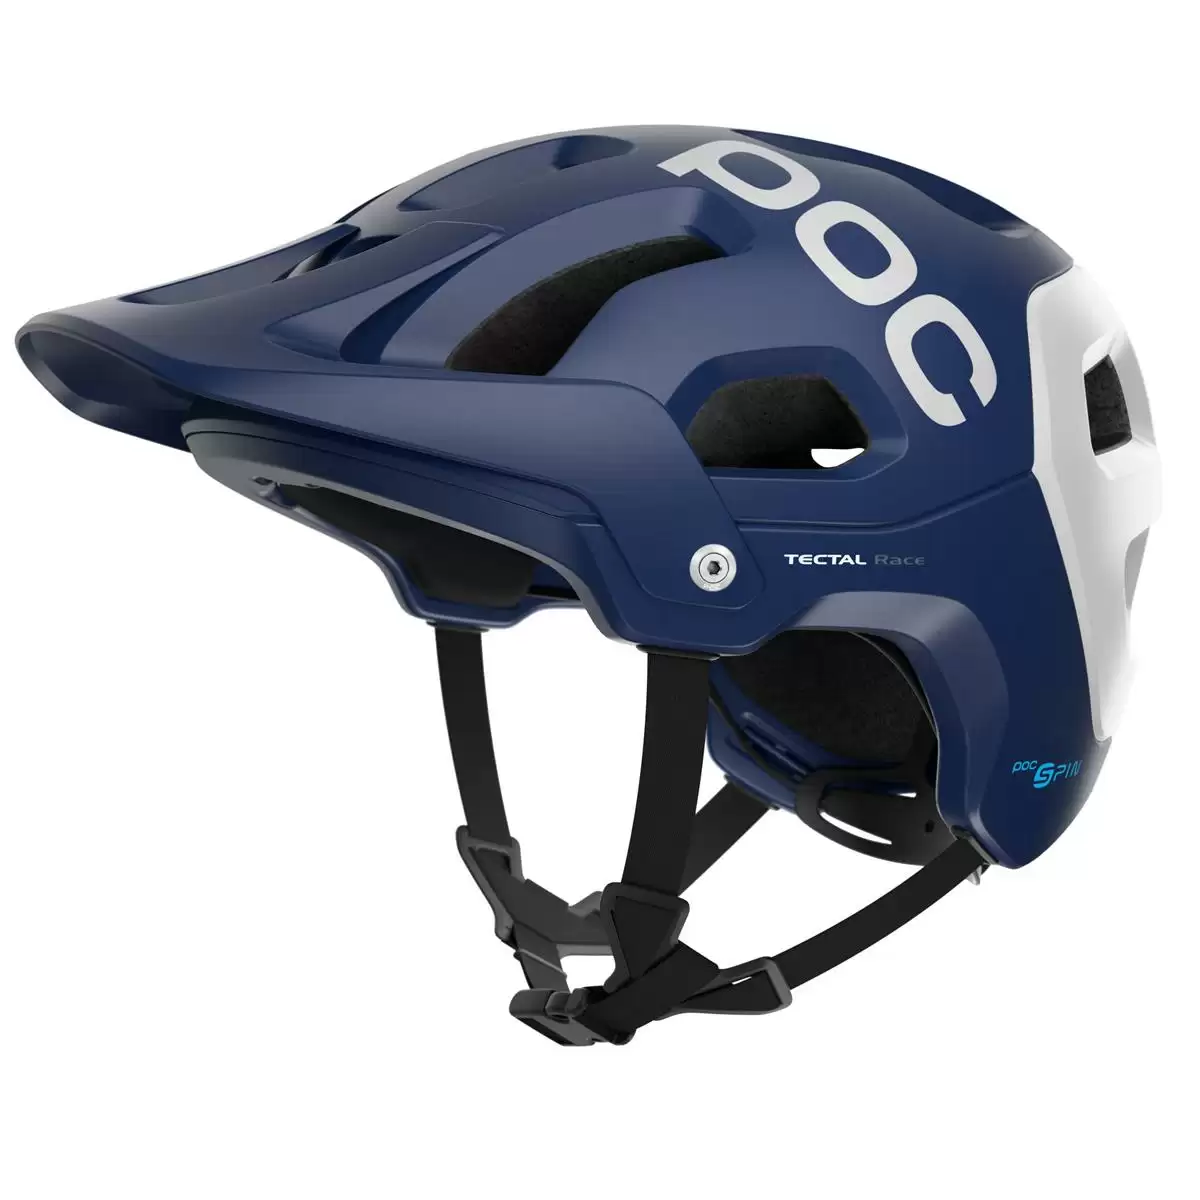 Enduro helmet Tectal Race Spin blue size XS-S (51-54cm) - image